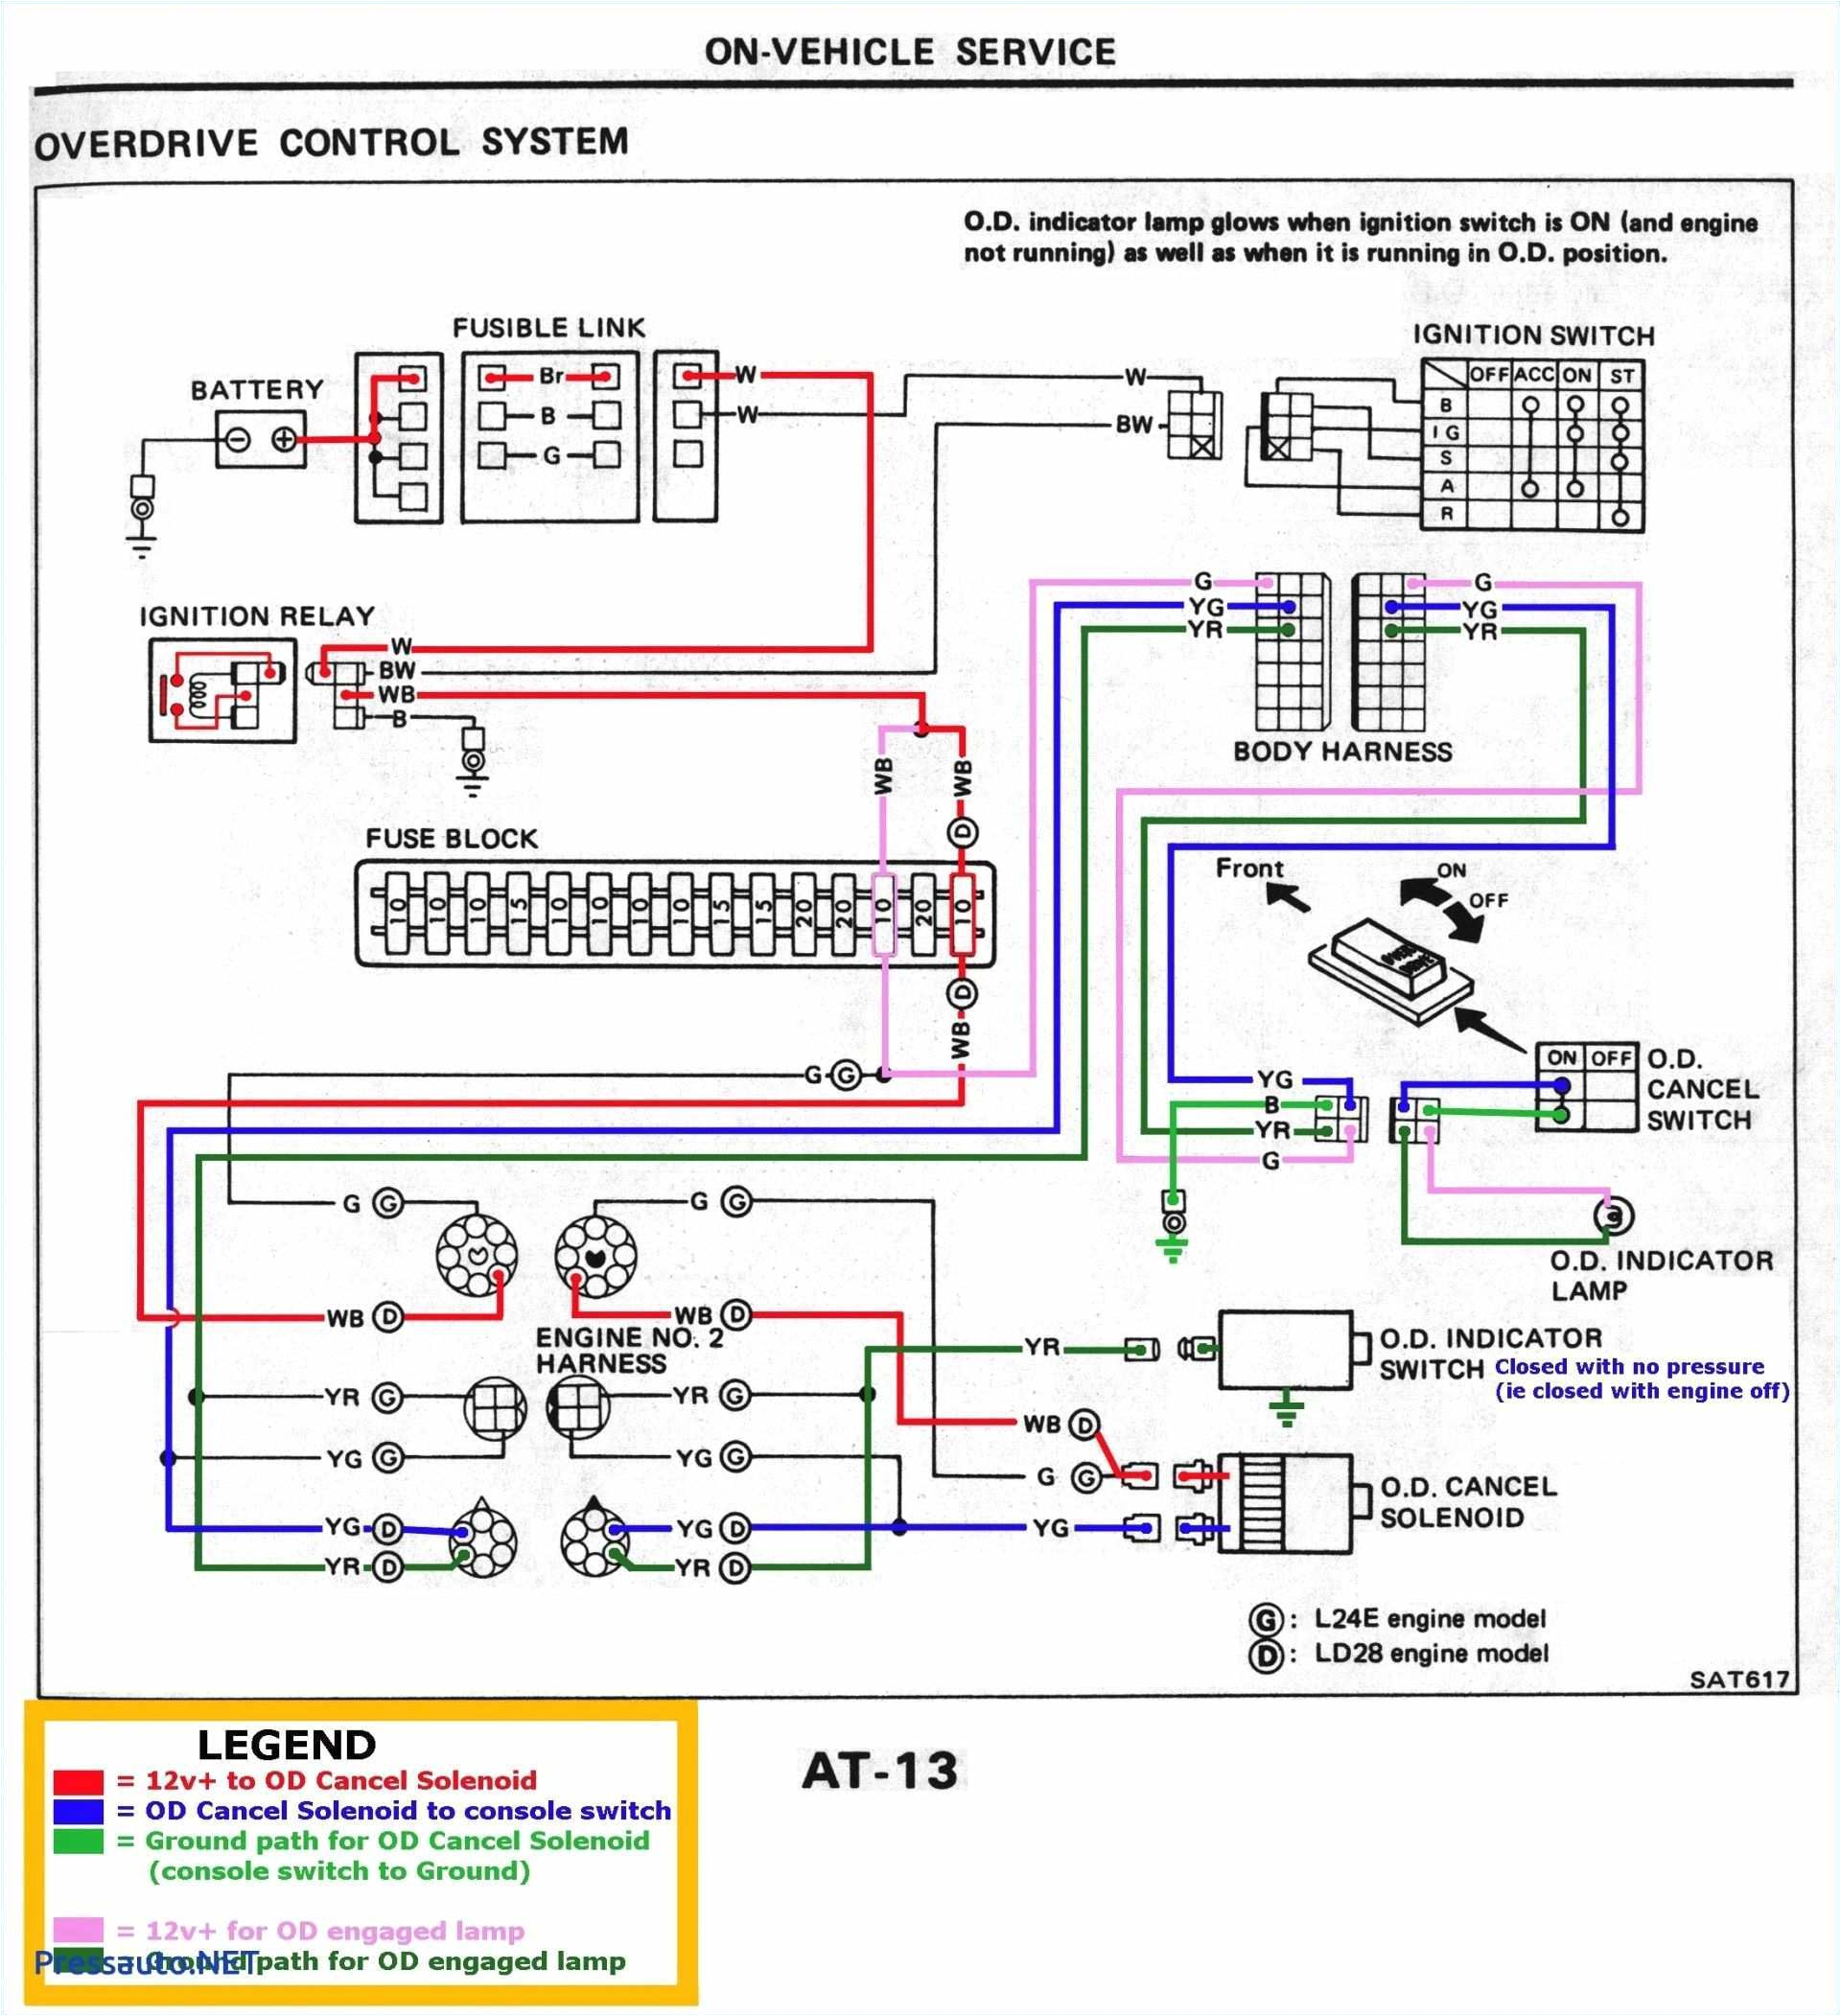 hsh 5 way wiring diagram dimarzio awesome wiring diagram for dimarzio dp216 of hsh 5 way wiring diagram dimarzio jpg